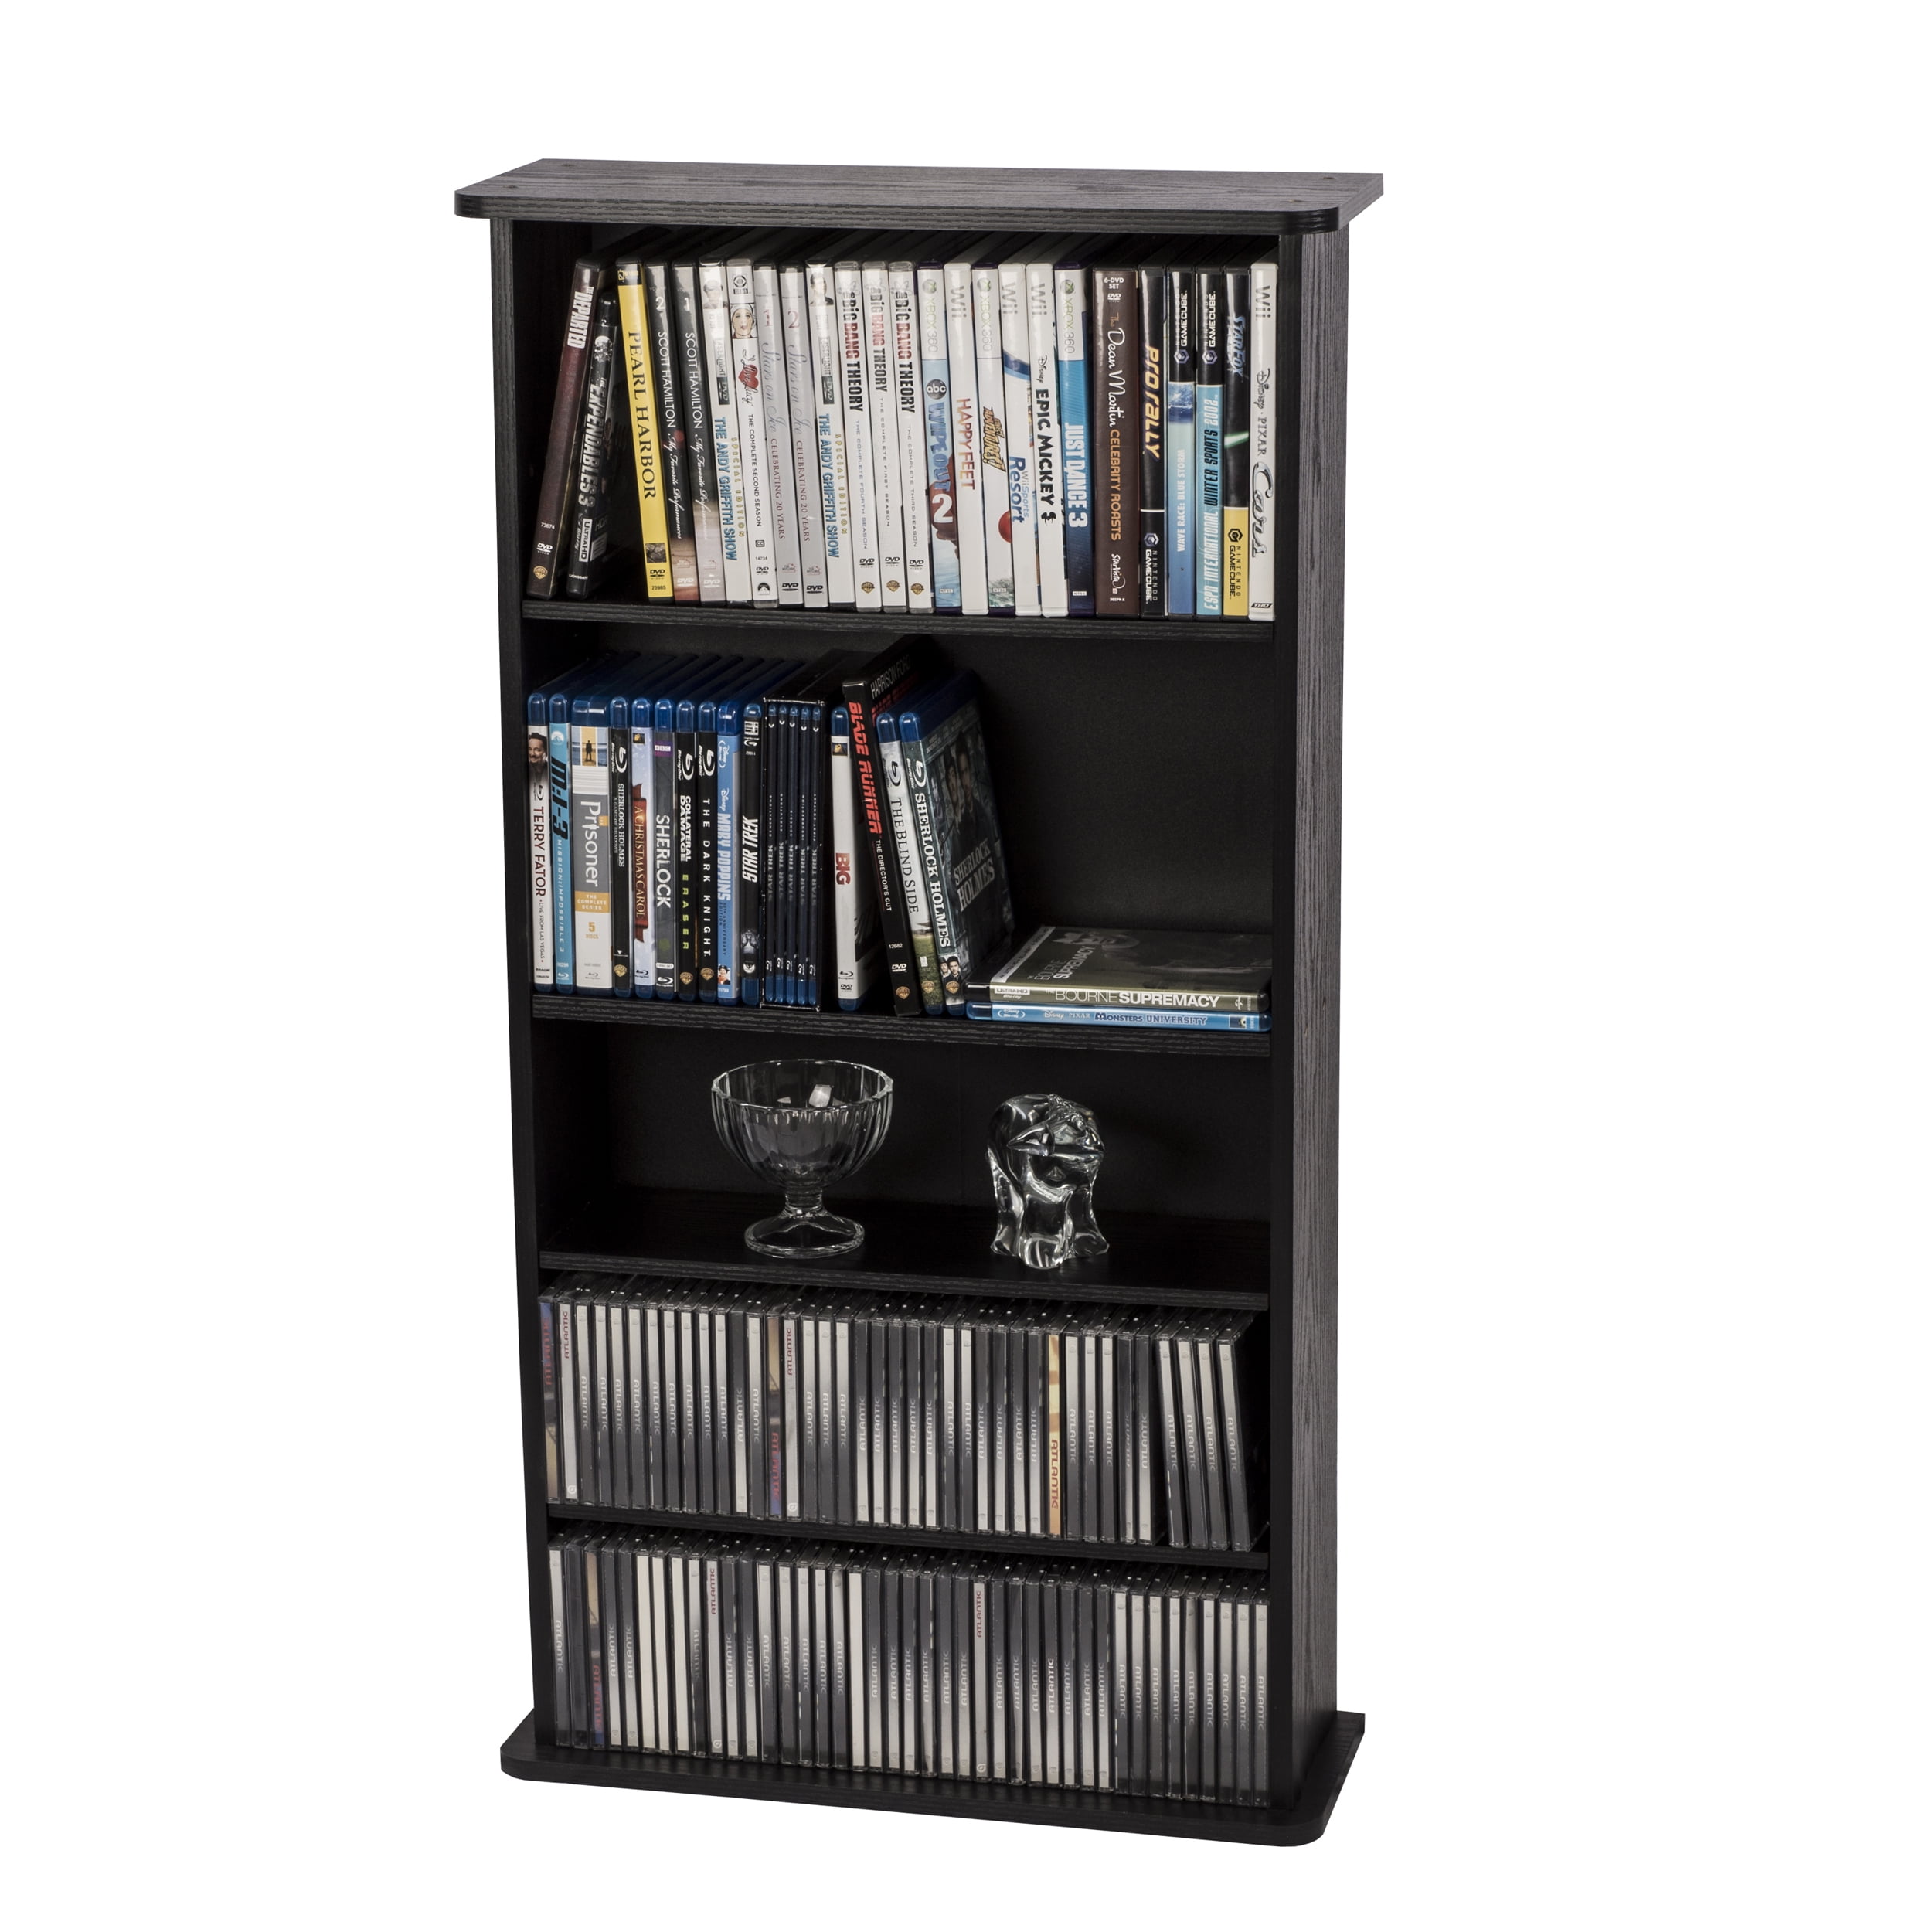 36 Drawbridge Wood Media Storage Shelf, Bookcase 7 Inches Deep